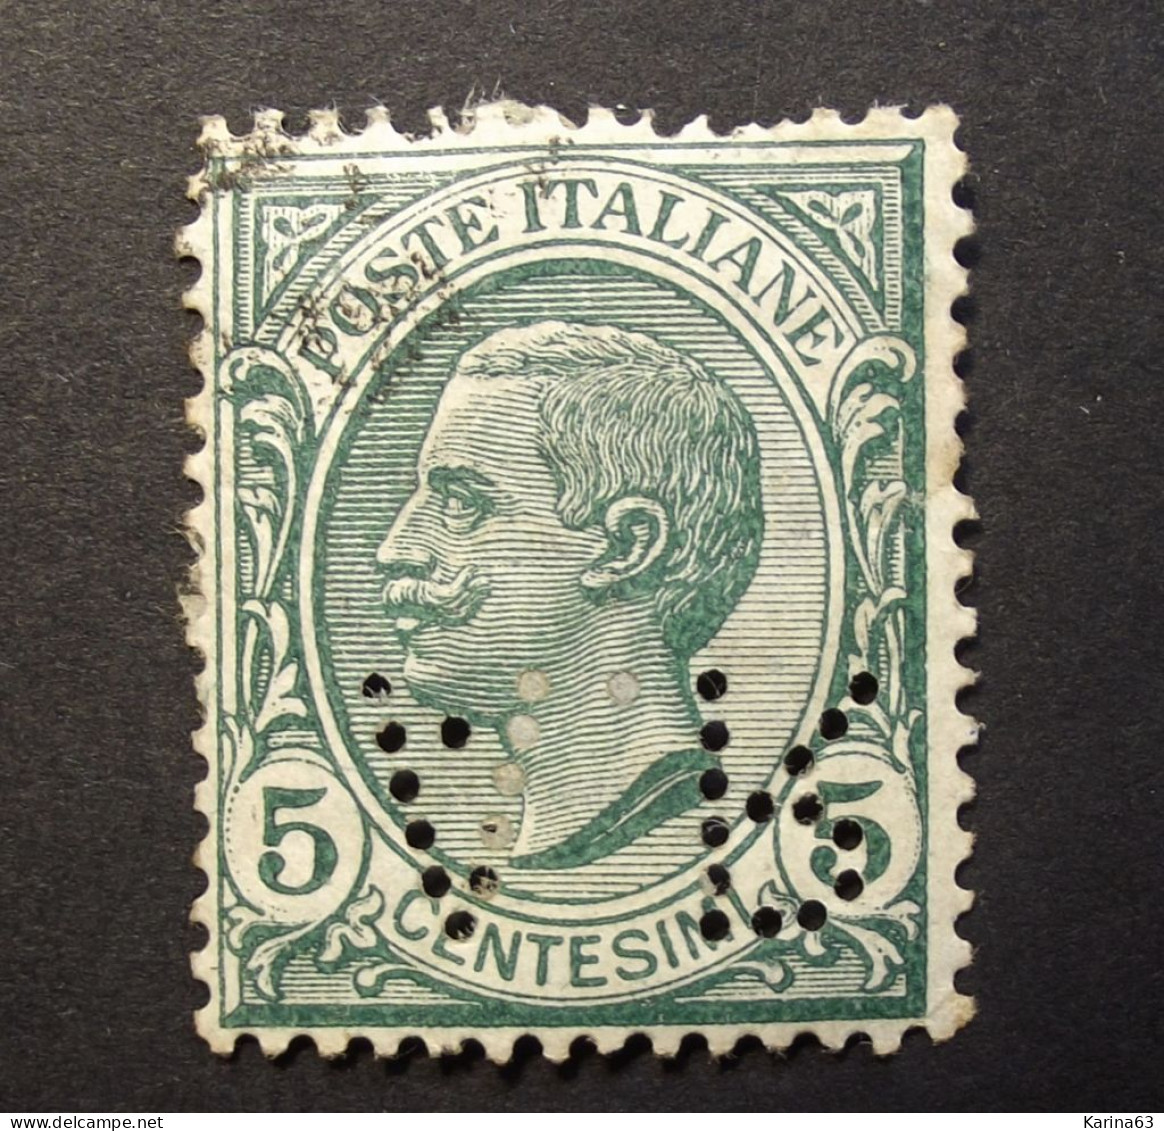 Italia - Italy - 1906 -  Perfin - Lochung -  A R -  A.Rejna - Milano  -  Cancelled - Gebraucht